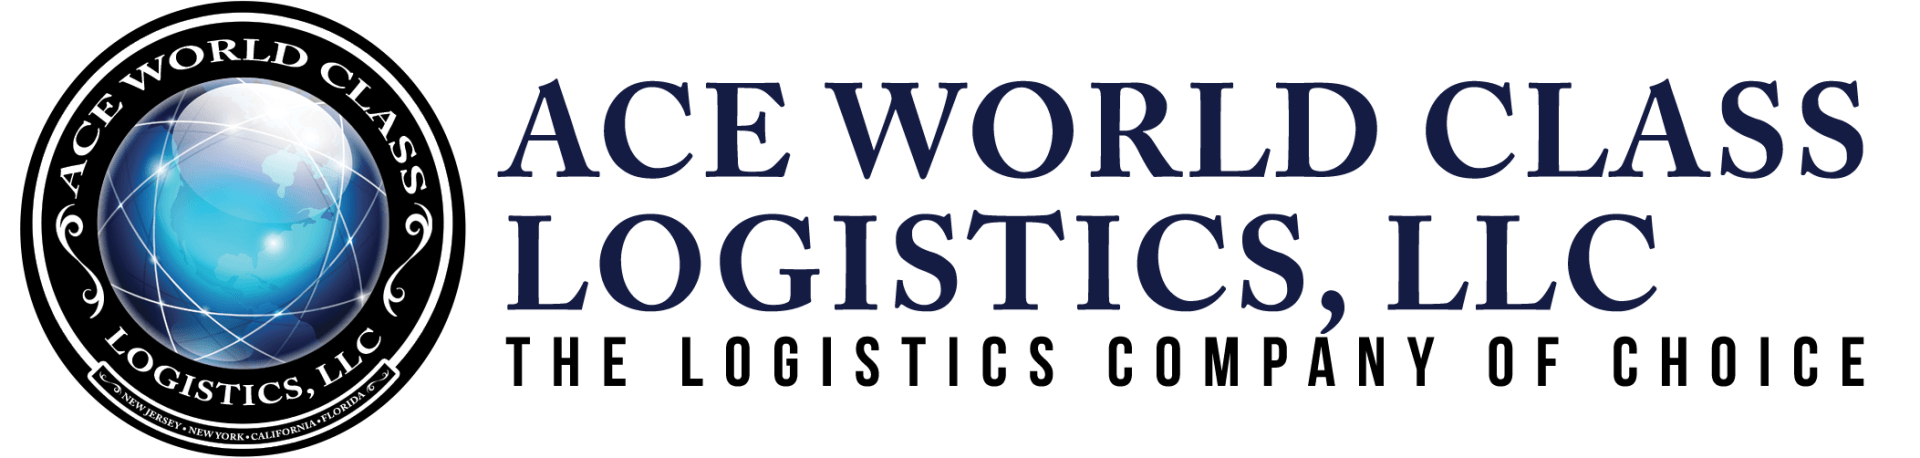 ace world class logistics llc is the logistics company of choice